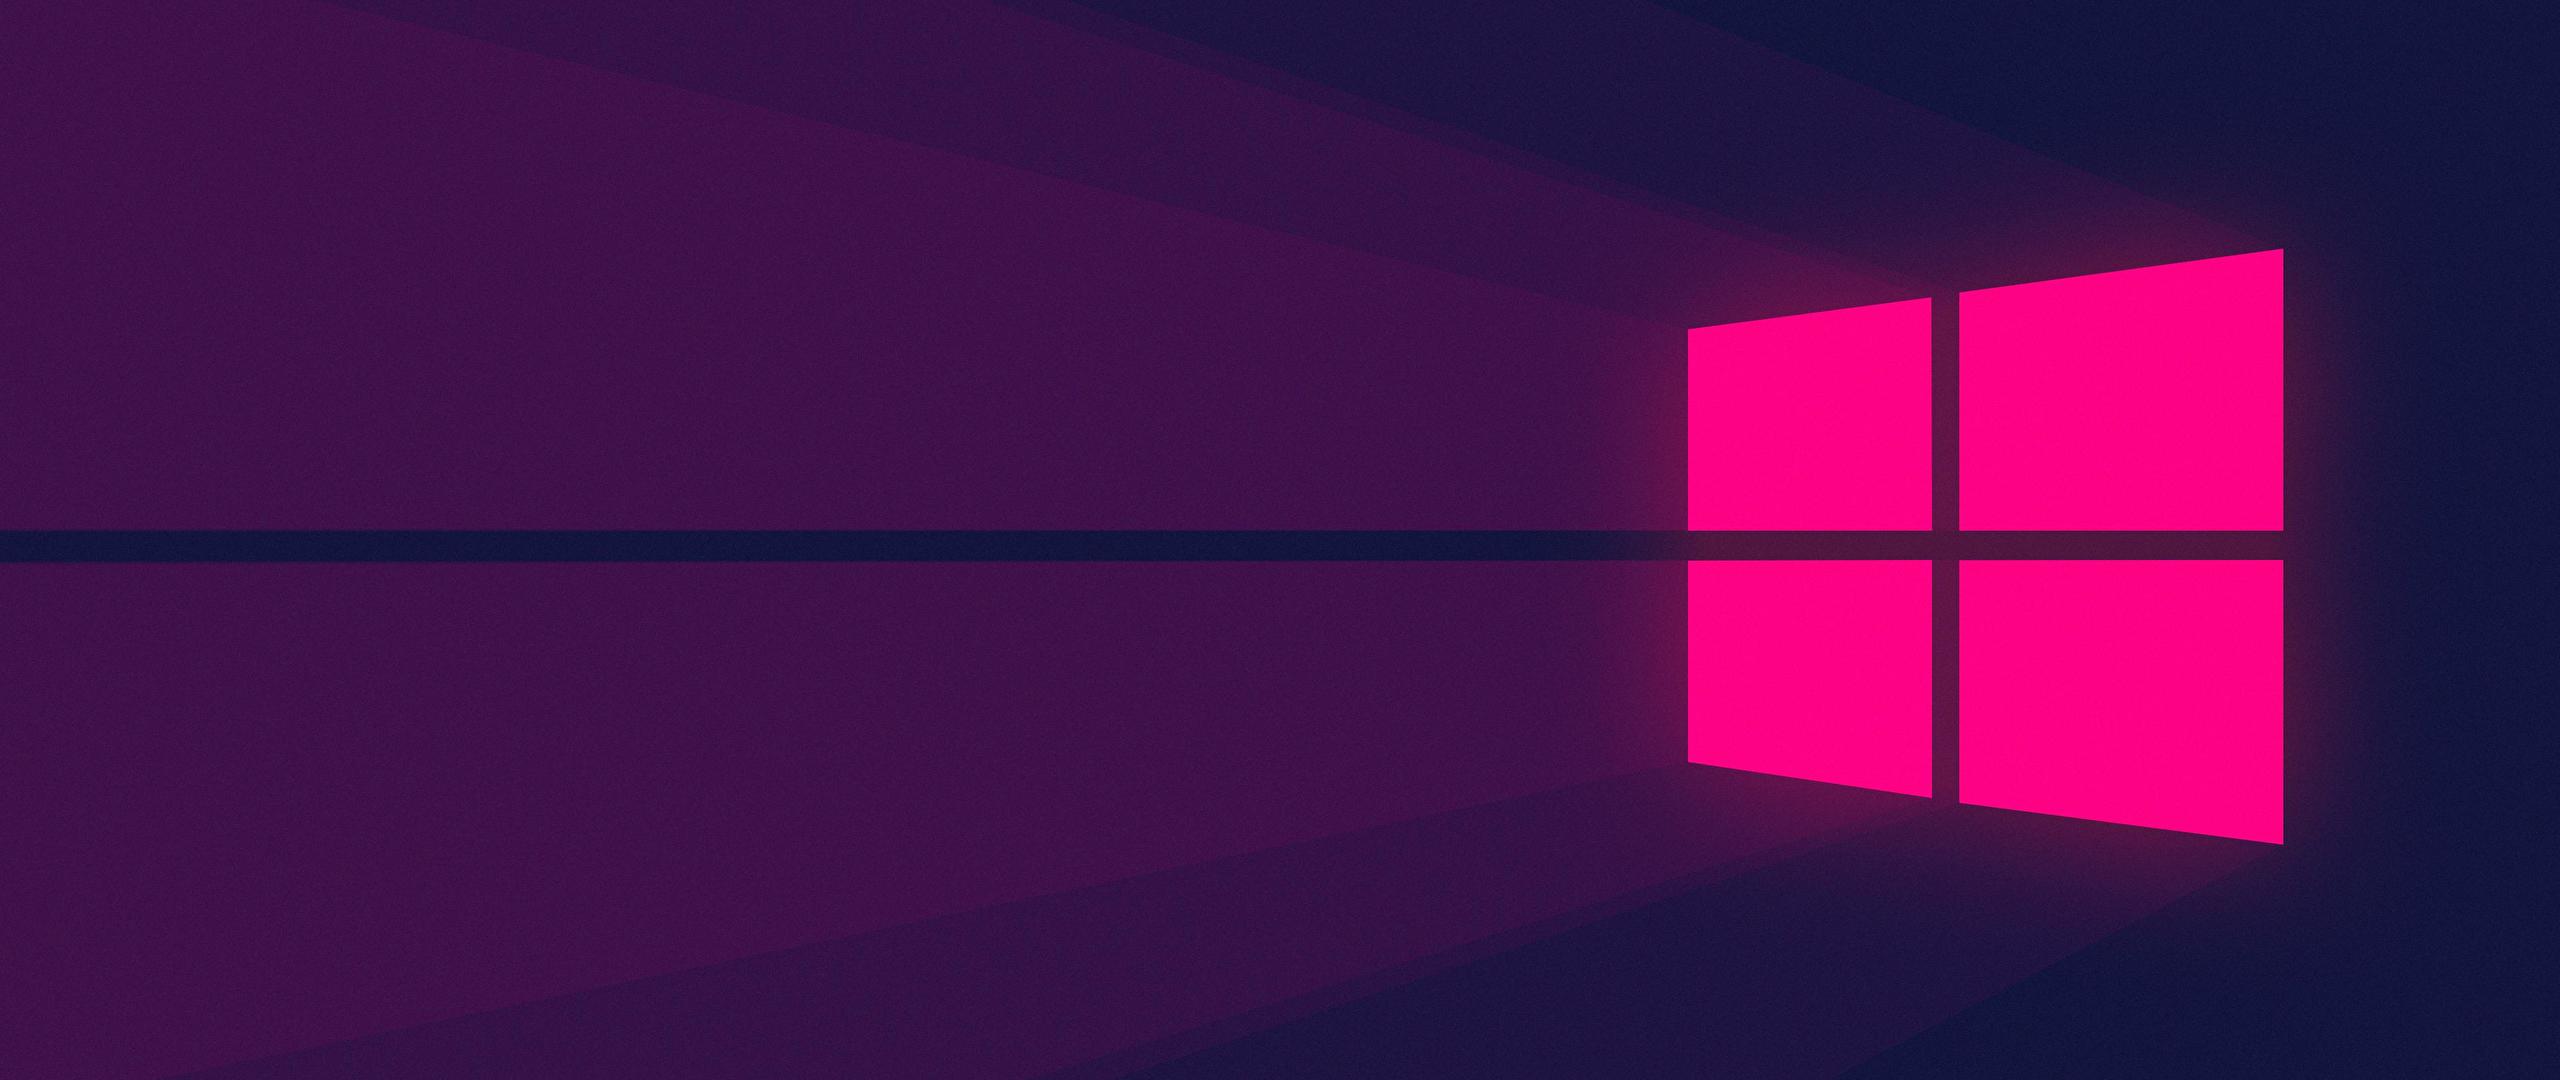 Windows Next wallpaper in 4K [3840x2160]